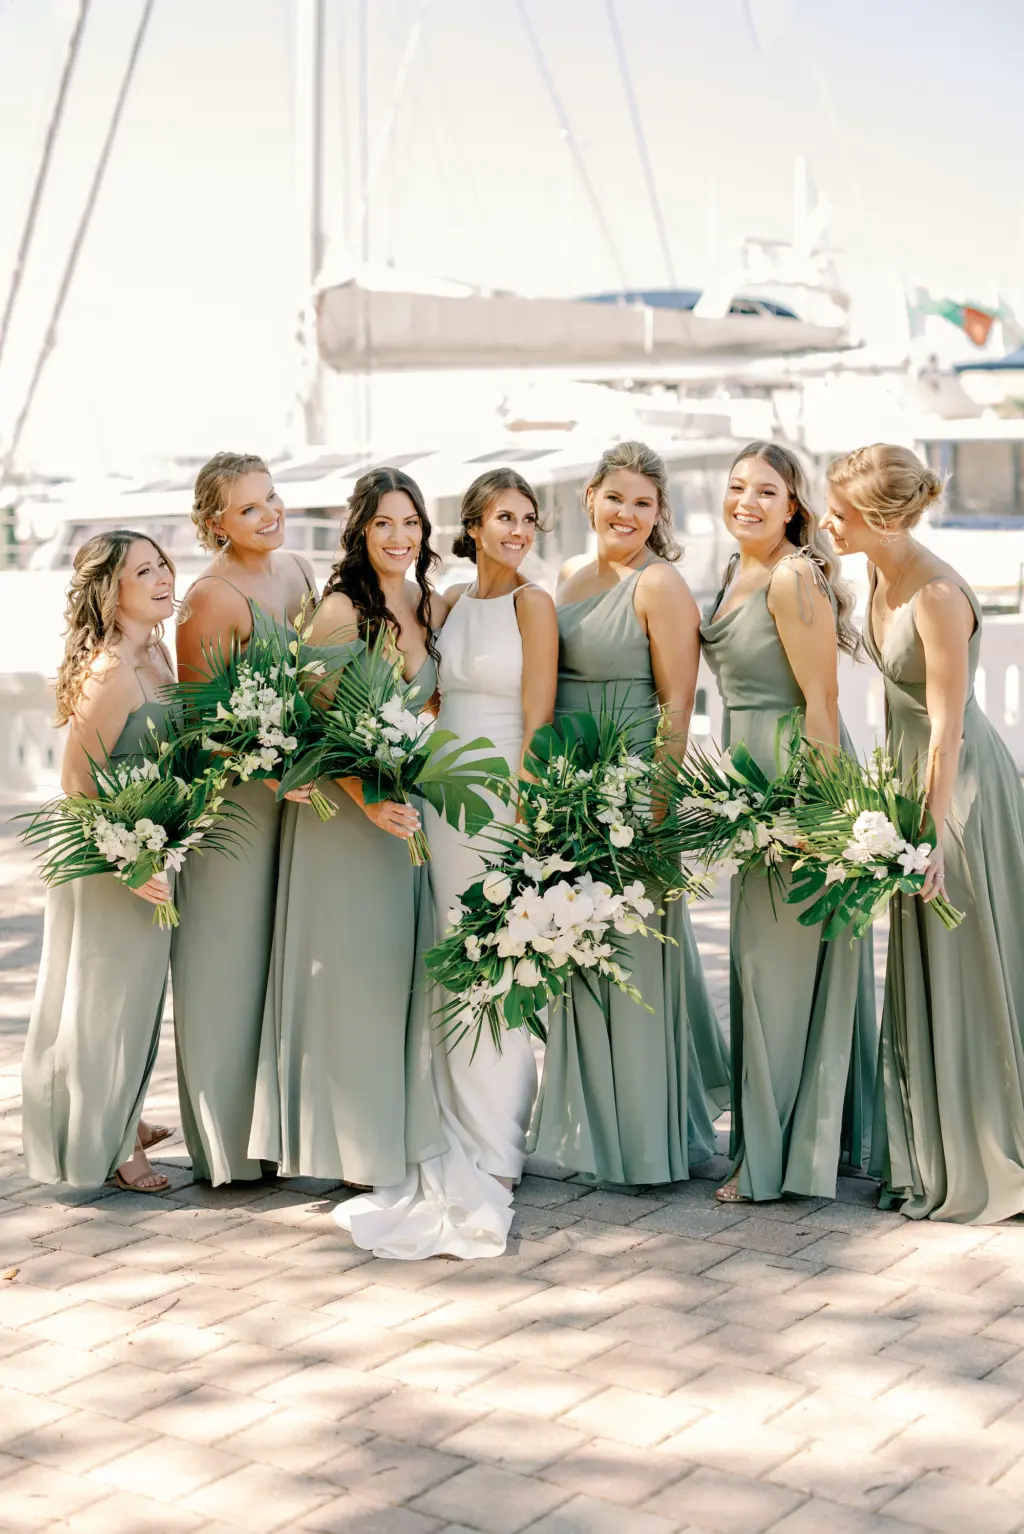 Brides with Bridesmaids Wedding Portrait in Pastel Sage Green Floor Length Bridesmaids Dresses